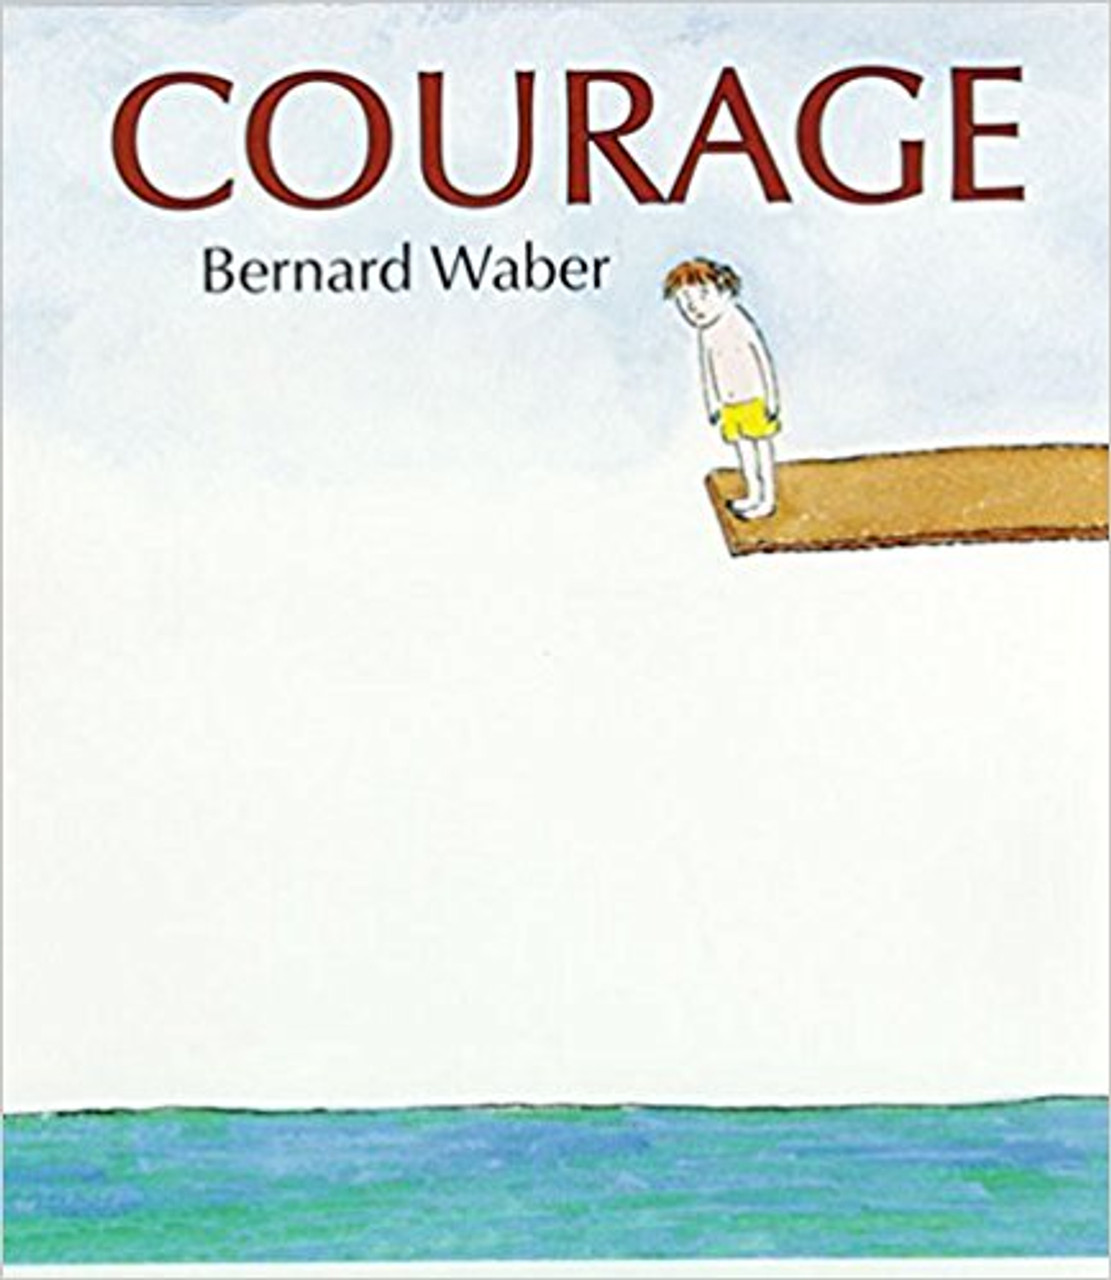 Courage by Bernard Waber